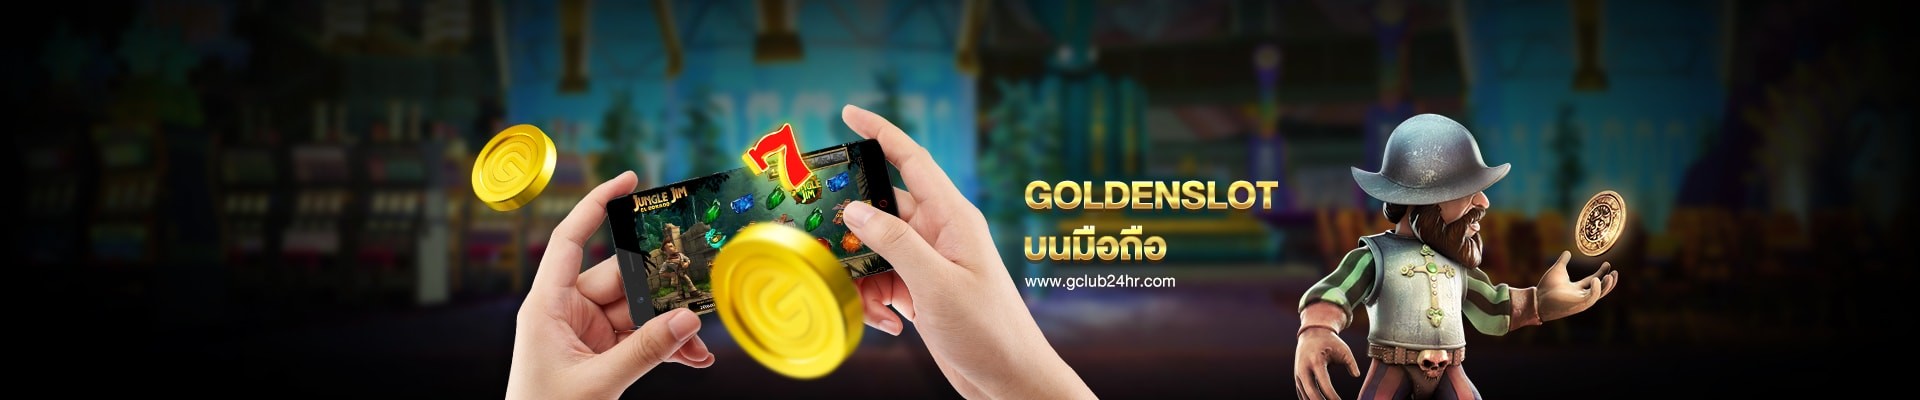 gclub24hr_casino_online_goldenslot_mobile